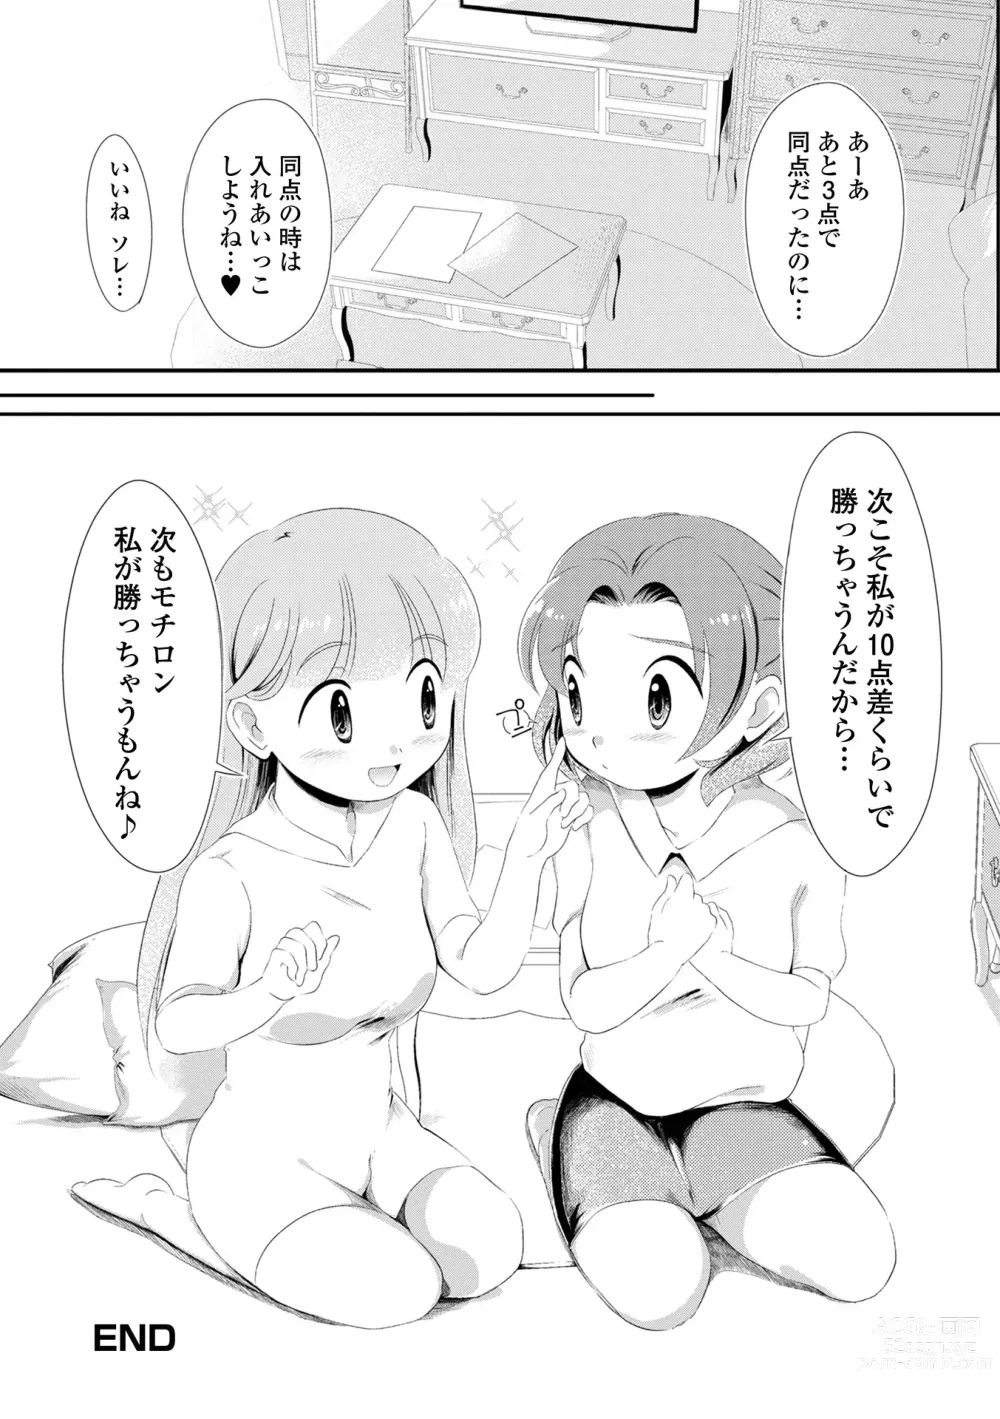 Page 112 of manga Futanari Friends! 17